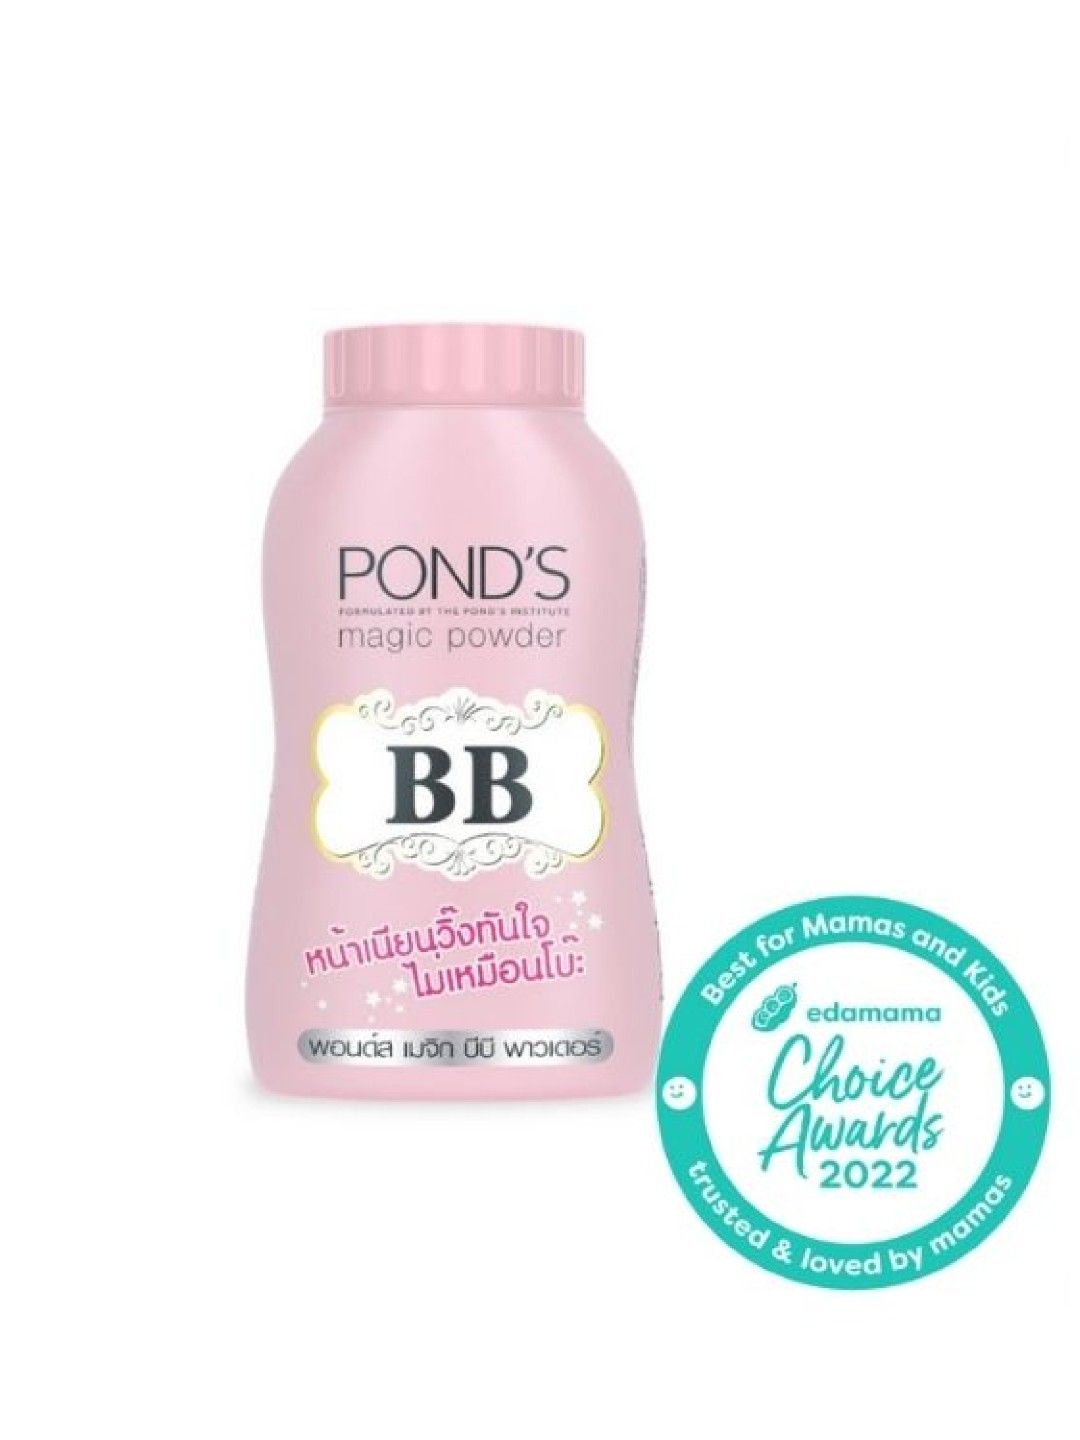 Pond's BB Magic Powder (50g)